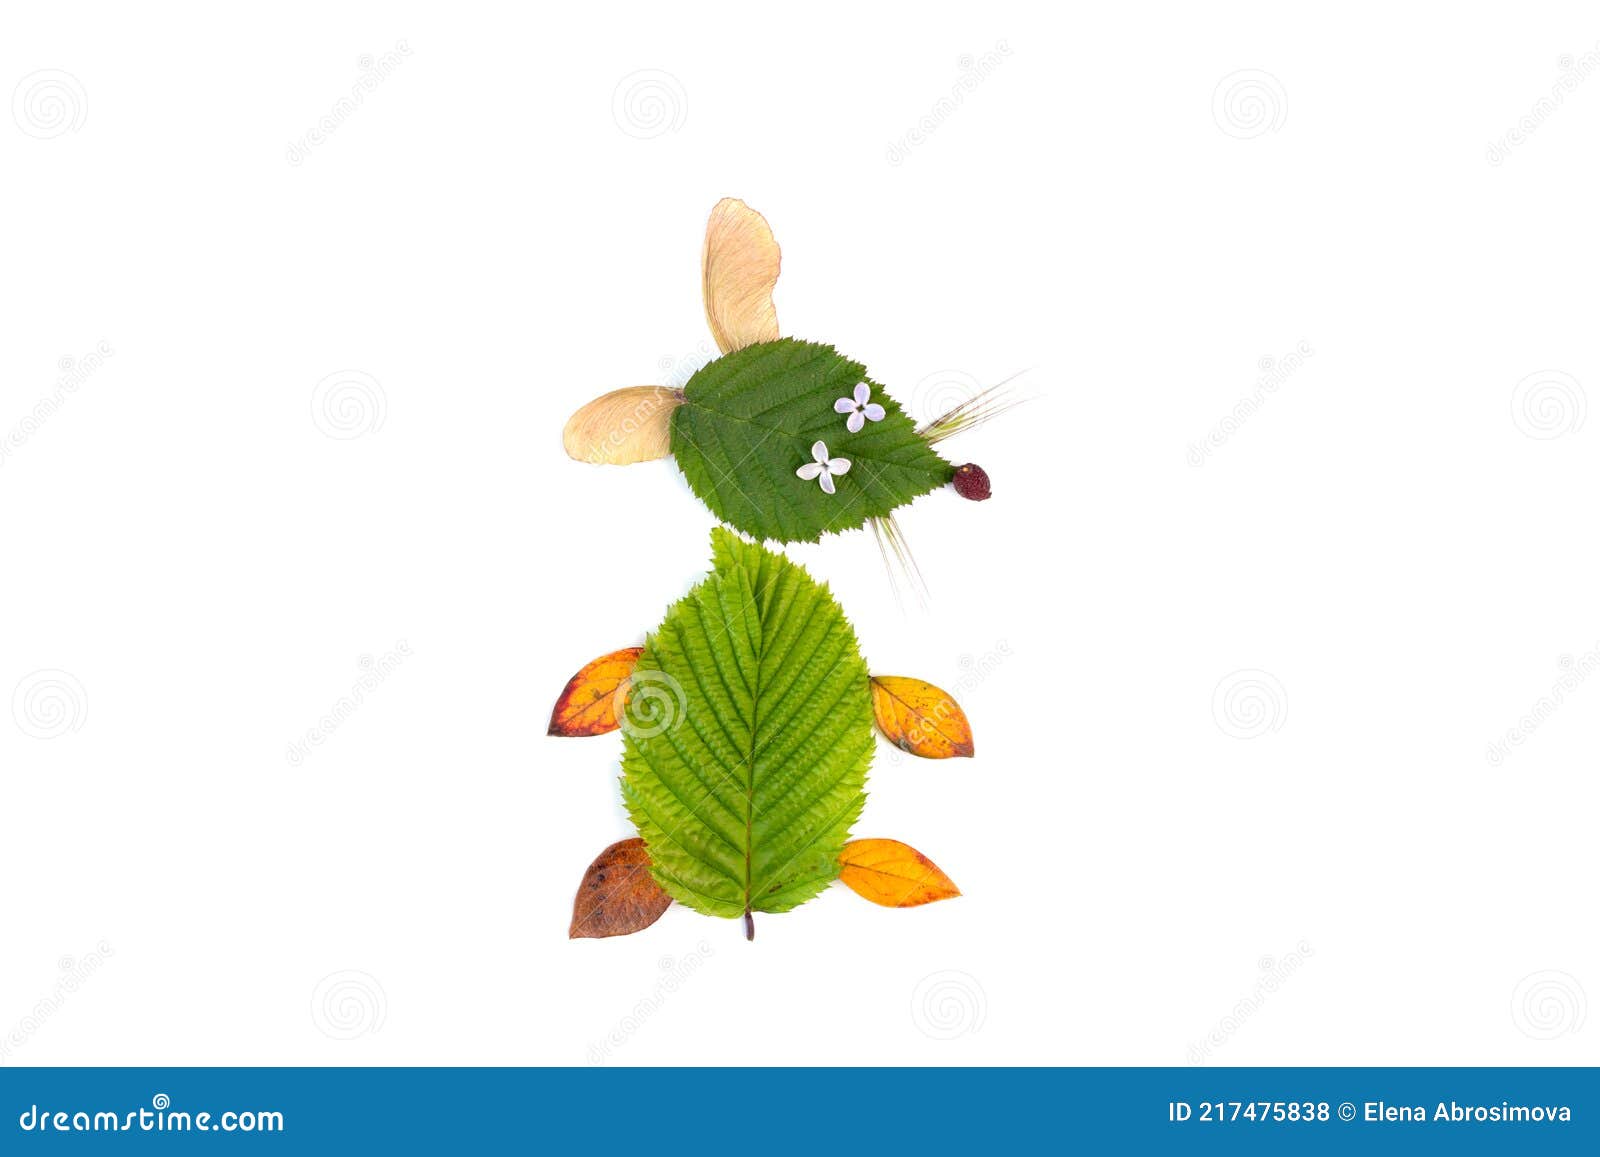 DIY Dry Leaf Clip-art for Kids, Tutorial Stock Photo - Image of lesson,  handmade: 217475838